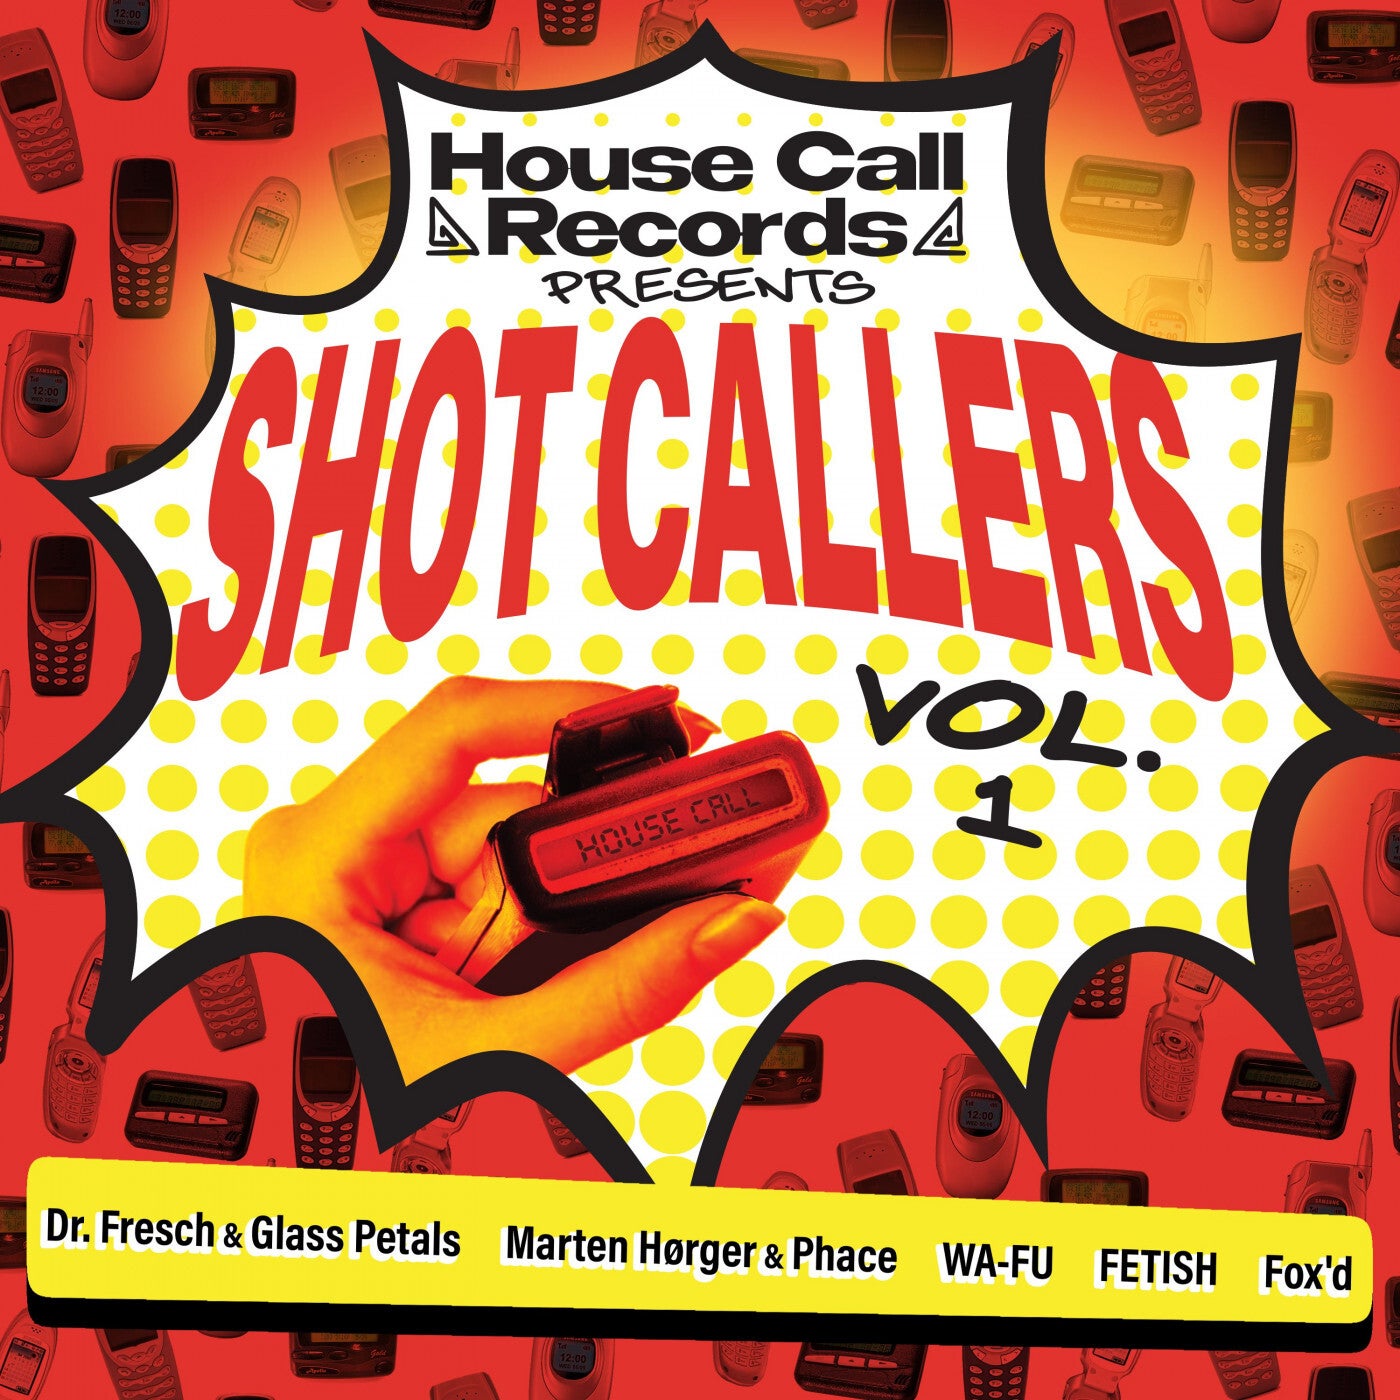 Shot Callers Vol. 1